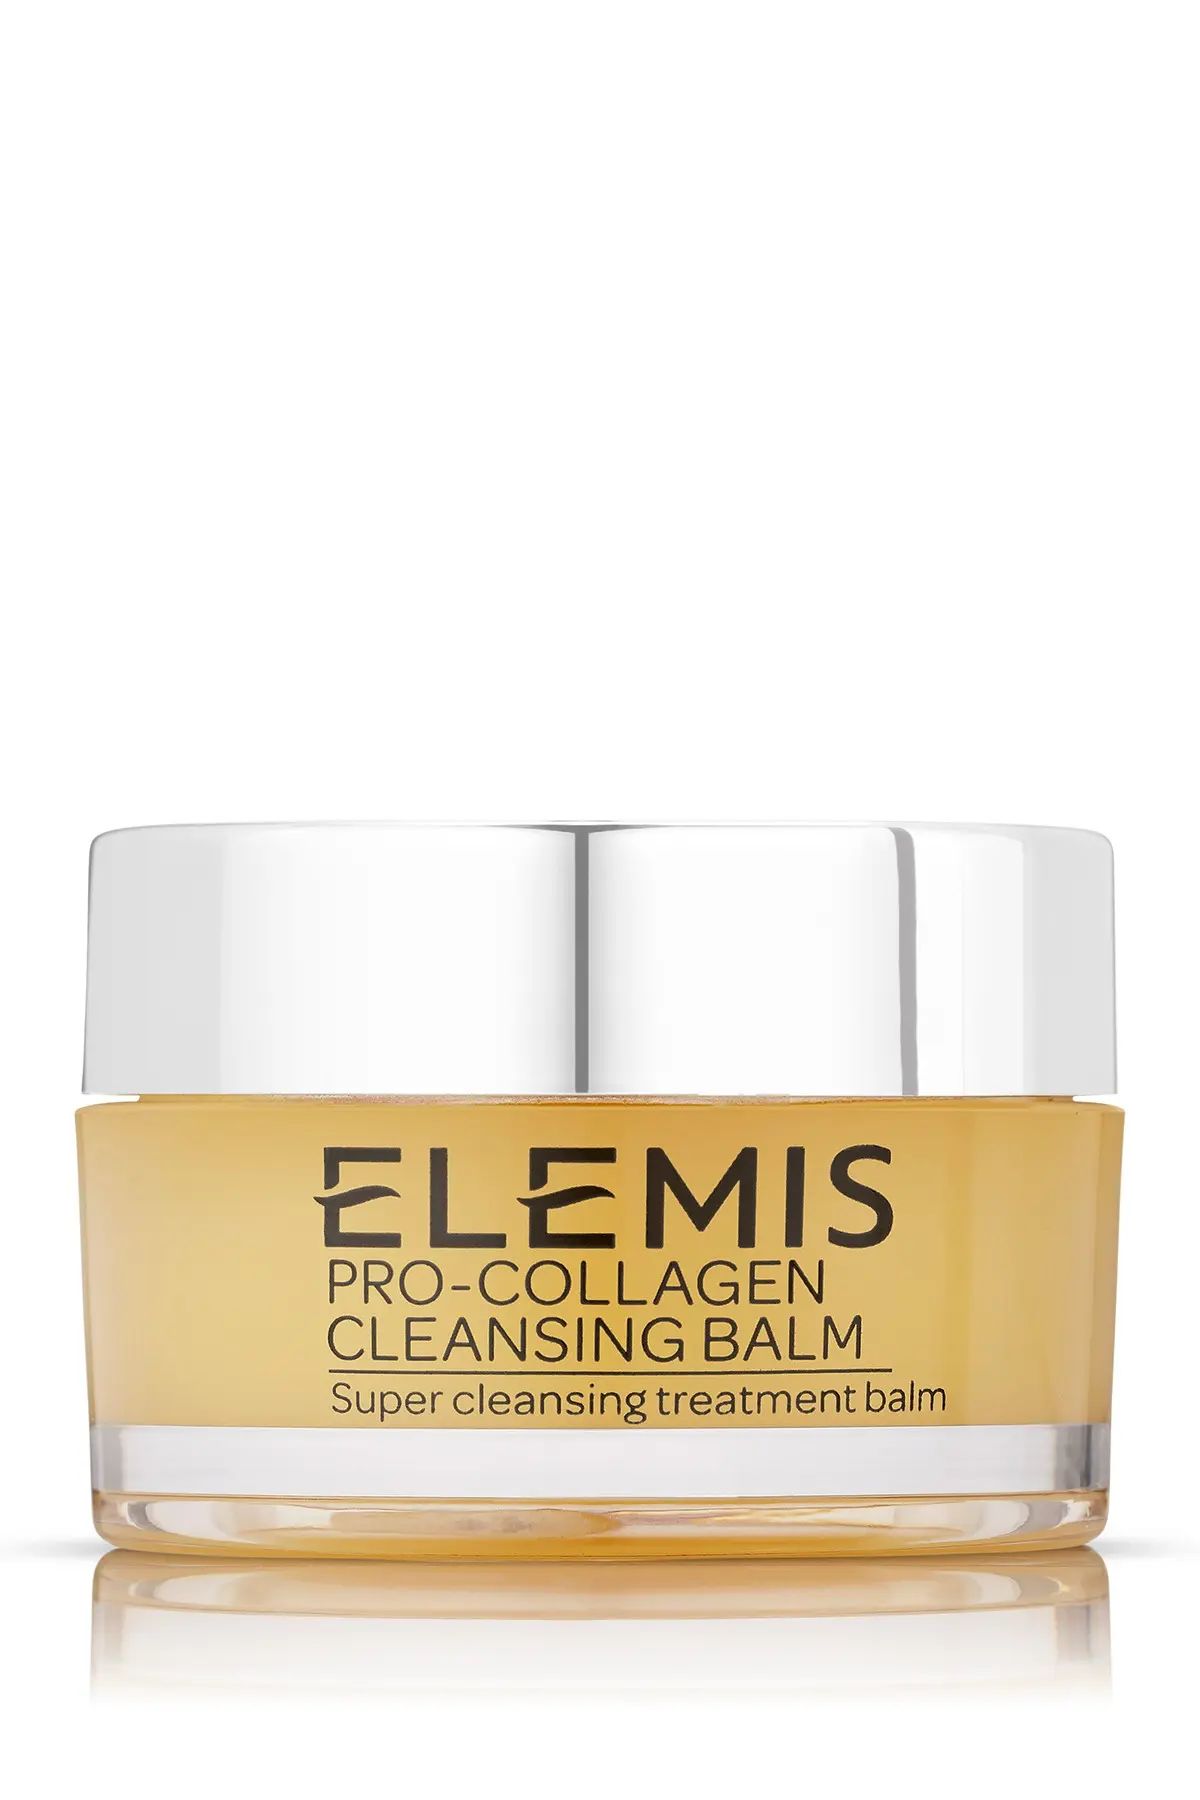 Elemis Pro-Collagen Cleansing Balm, Size 3.5 oz | Nordstrom